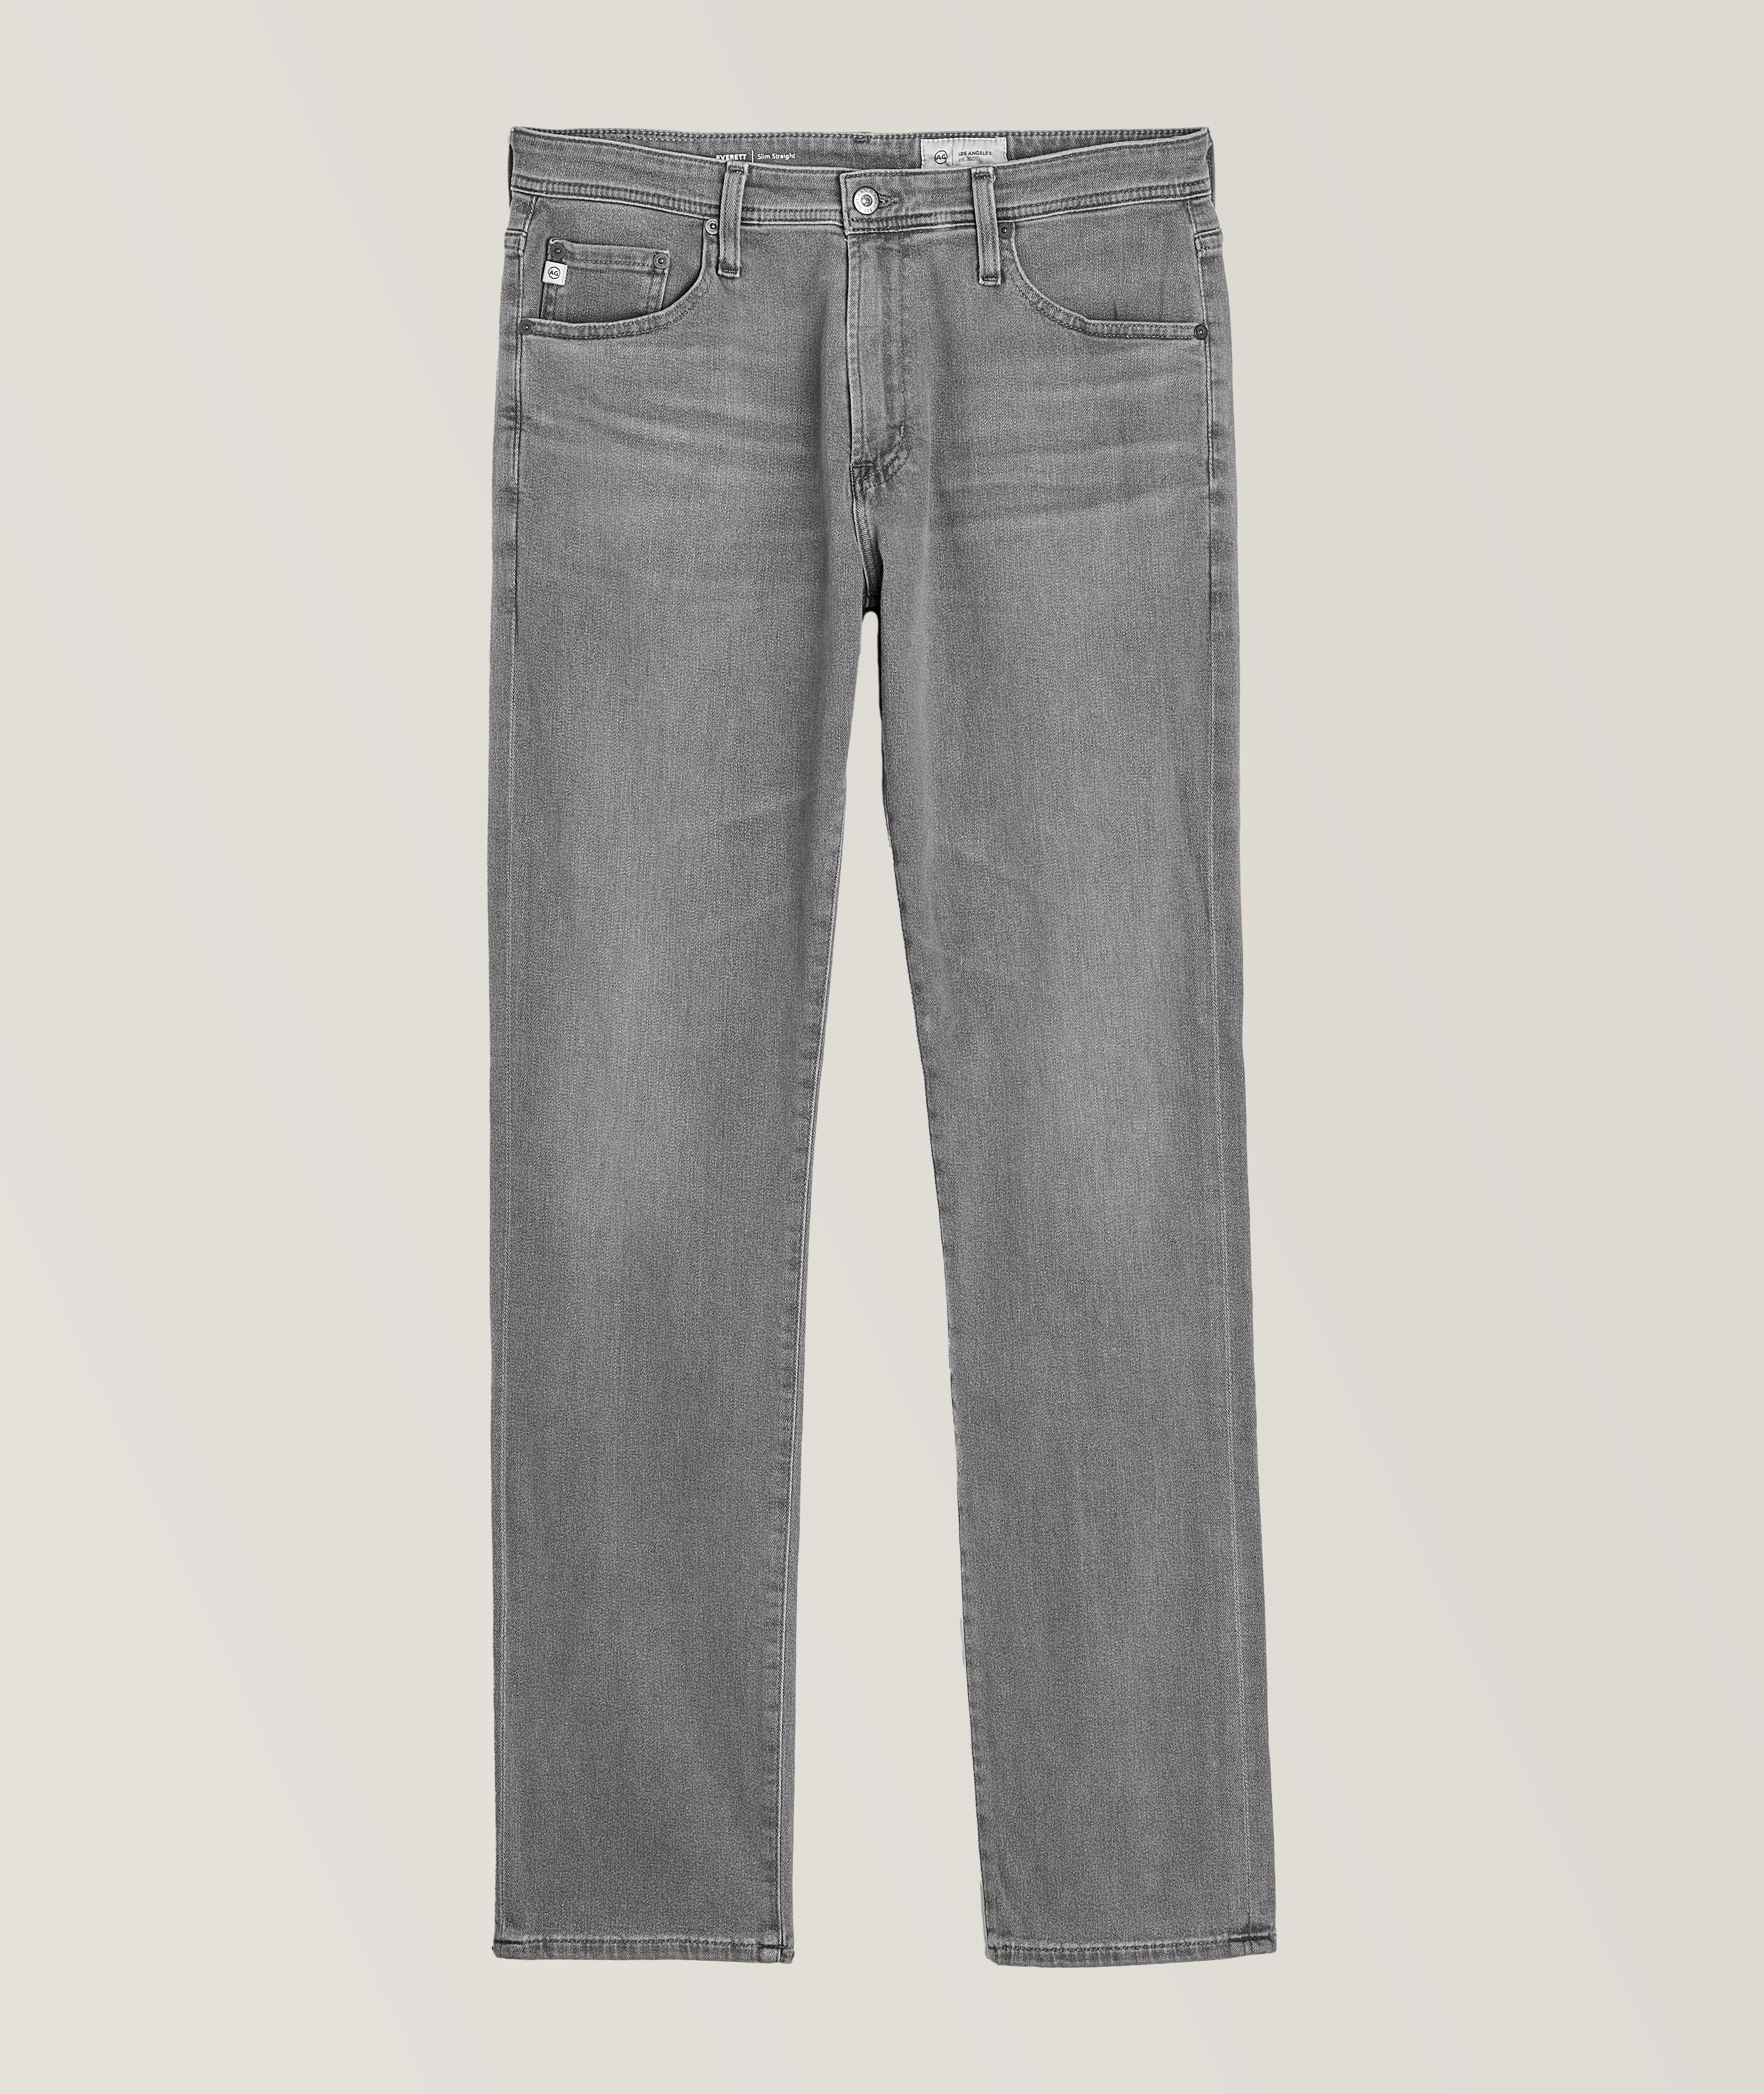 Everett Slim-Straight Cloud Soft Jeans image 0